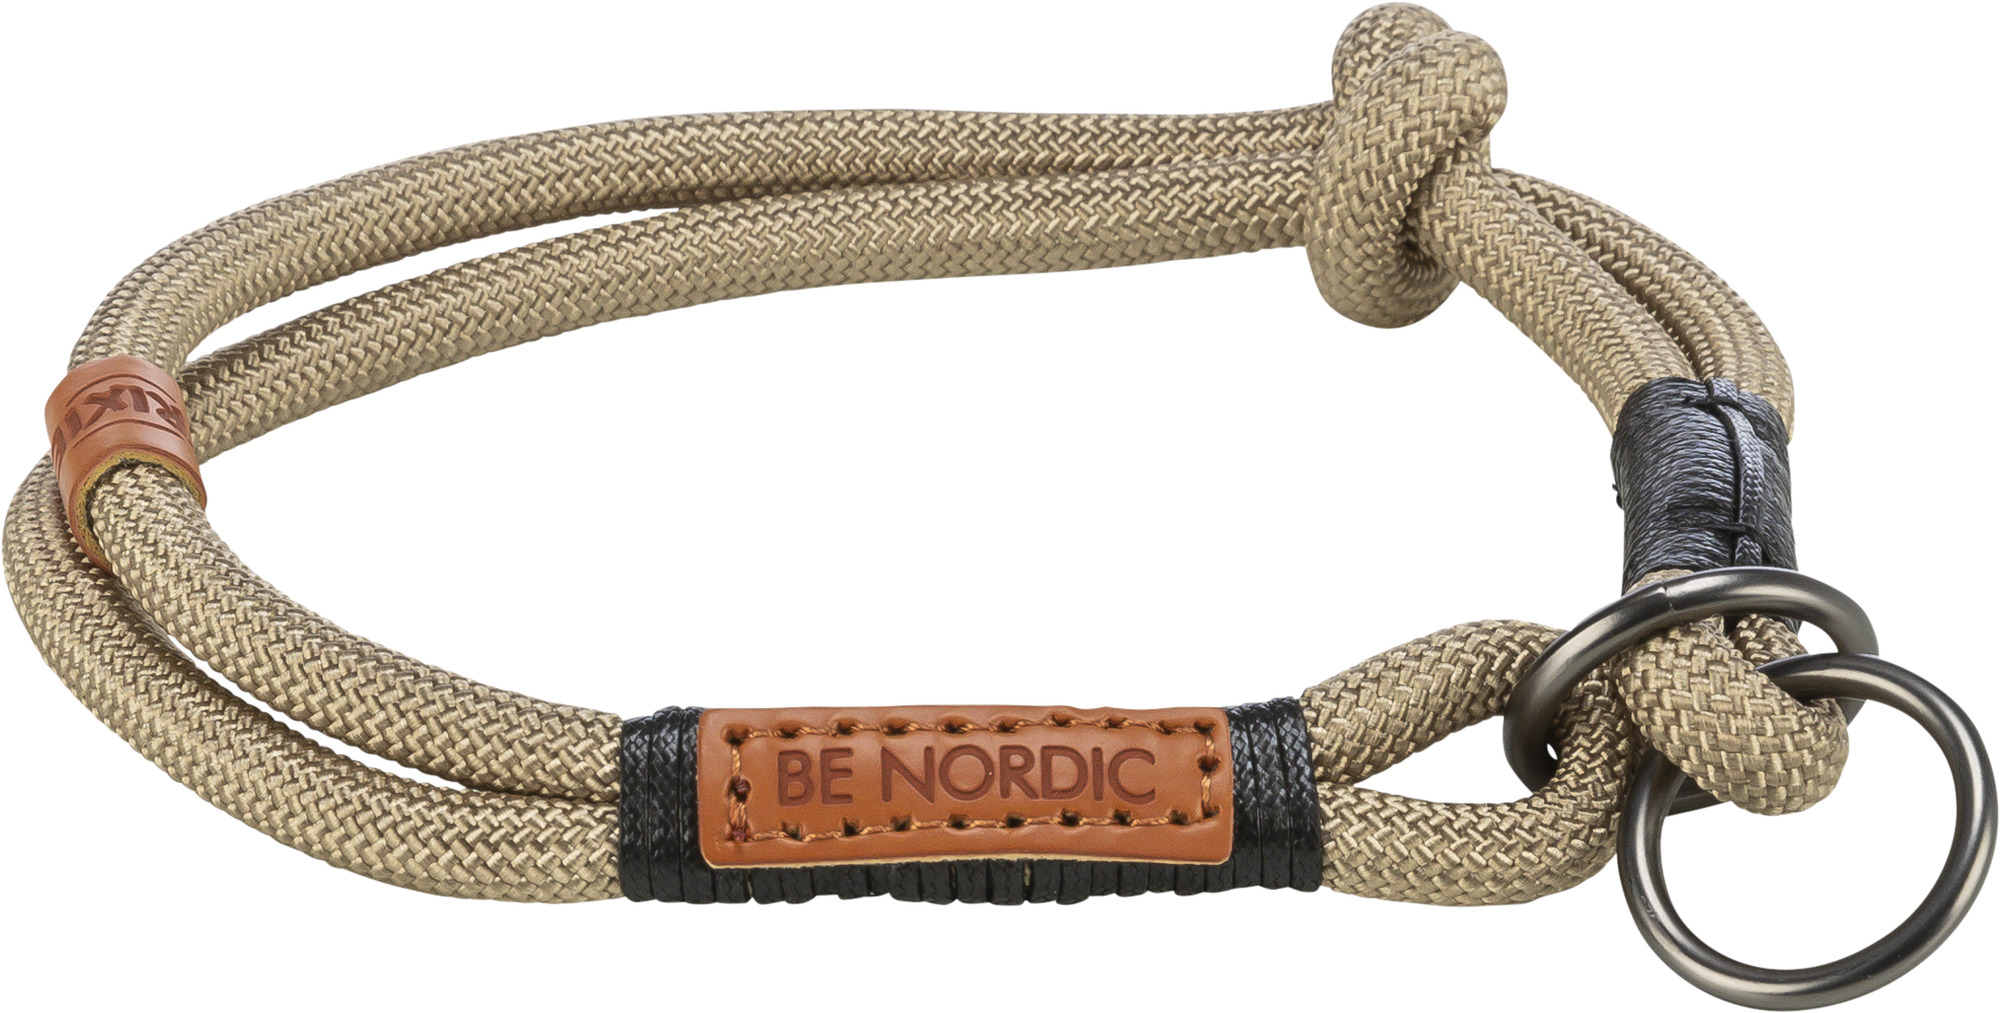 BE NORDIC collier semi-étrangleur en corde - Sable/Noir